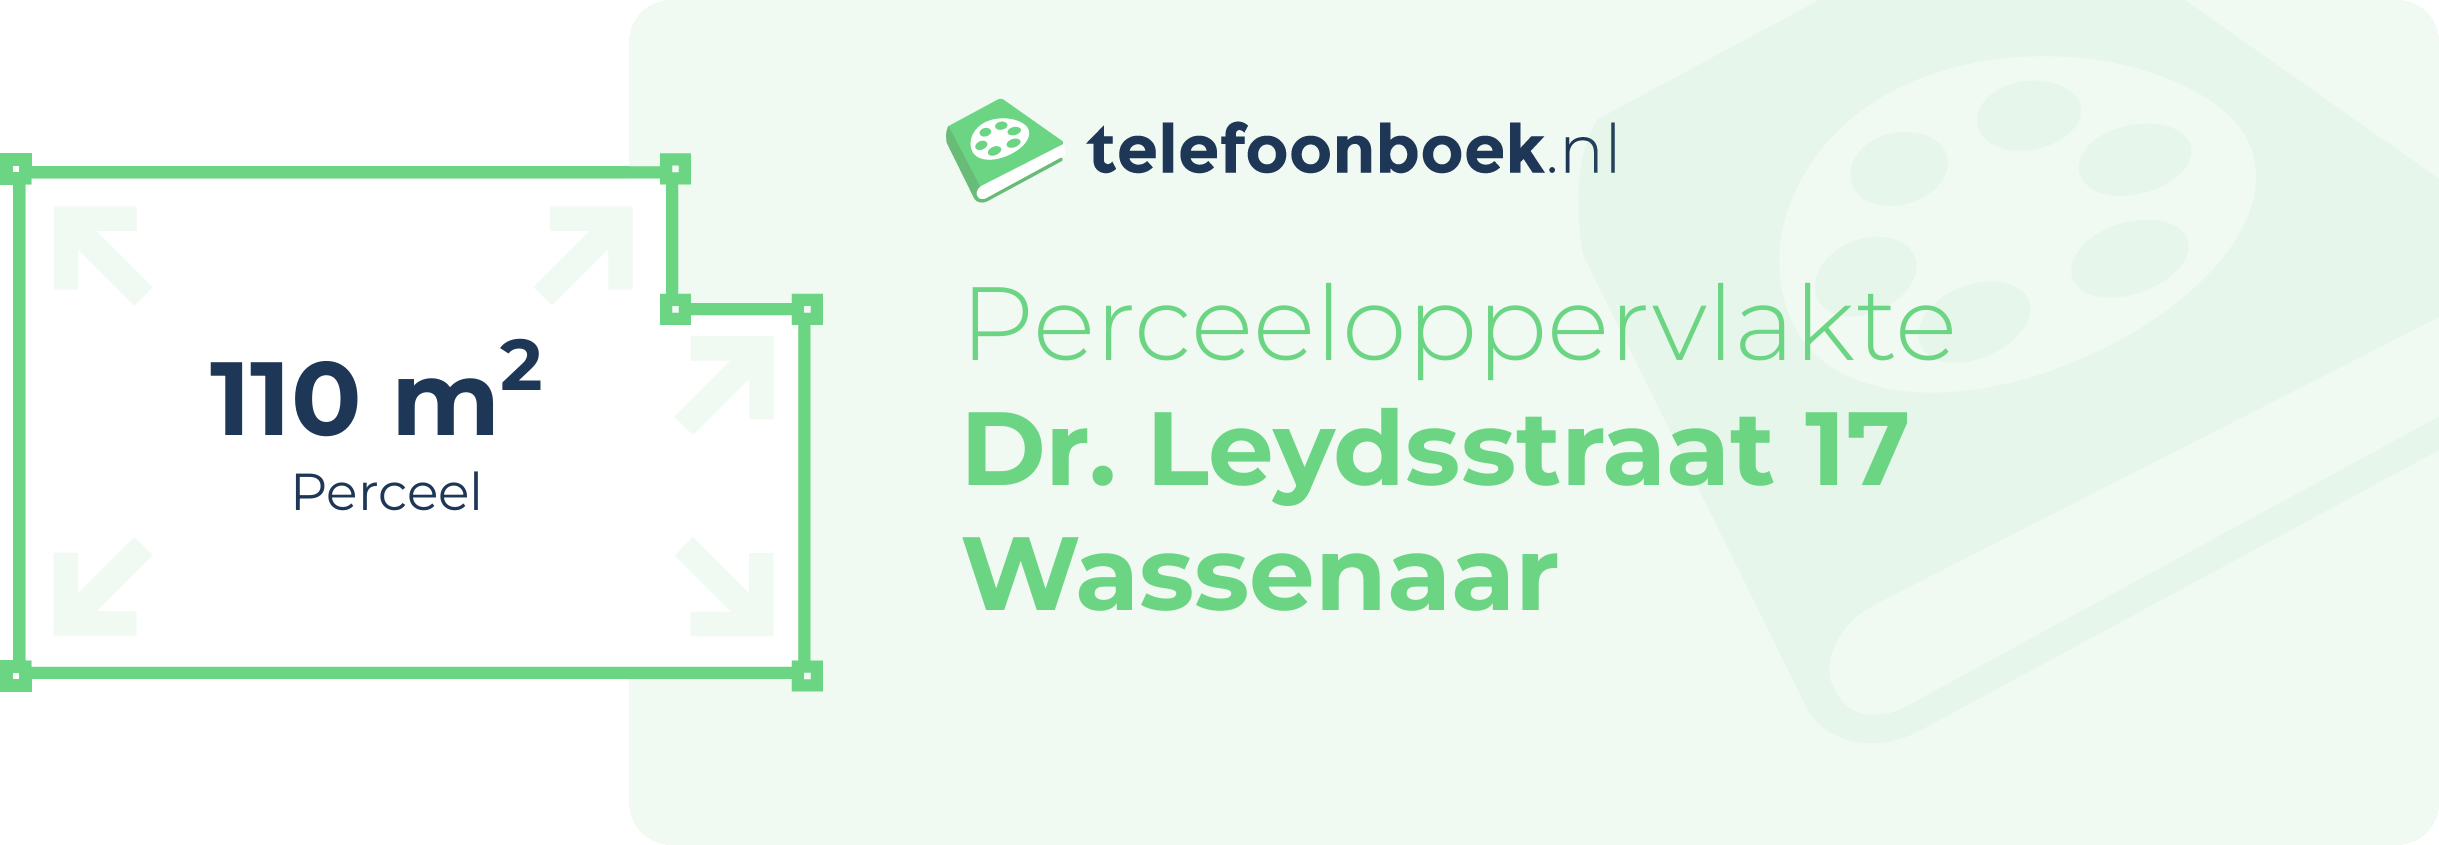 Perceeloppervlakte Dr. Leydsstraat 17 Wassenaar